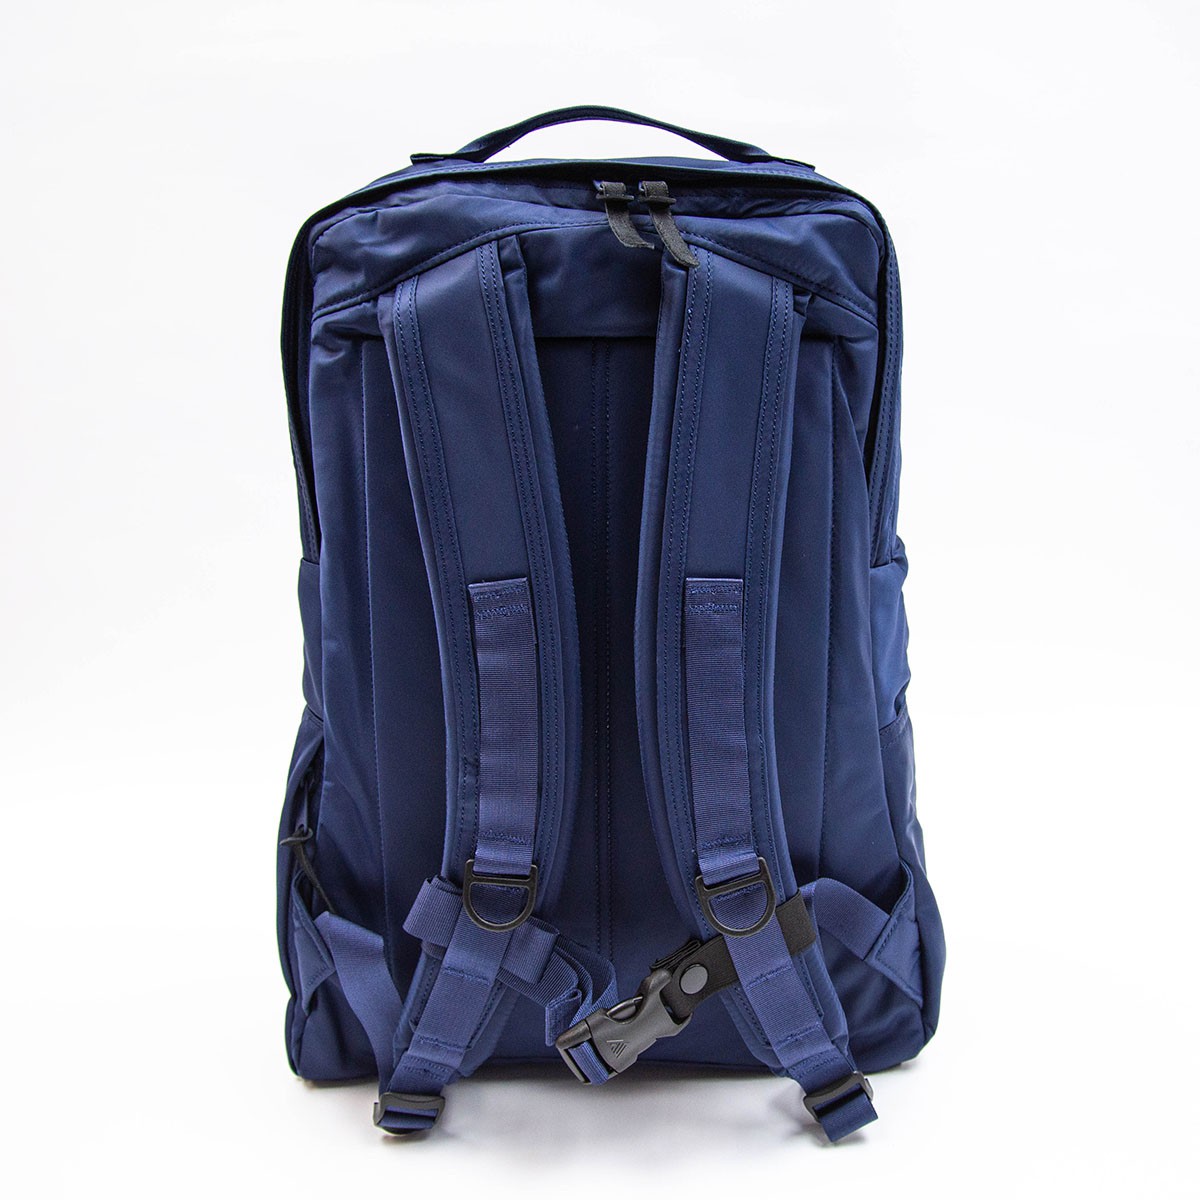 TripLabb Travel Backpack 一袋兩用旅行背囊 旅行及出差必備收納袋|超大容量|防盜防水